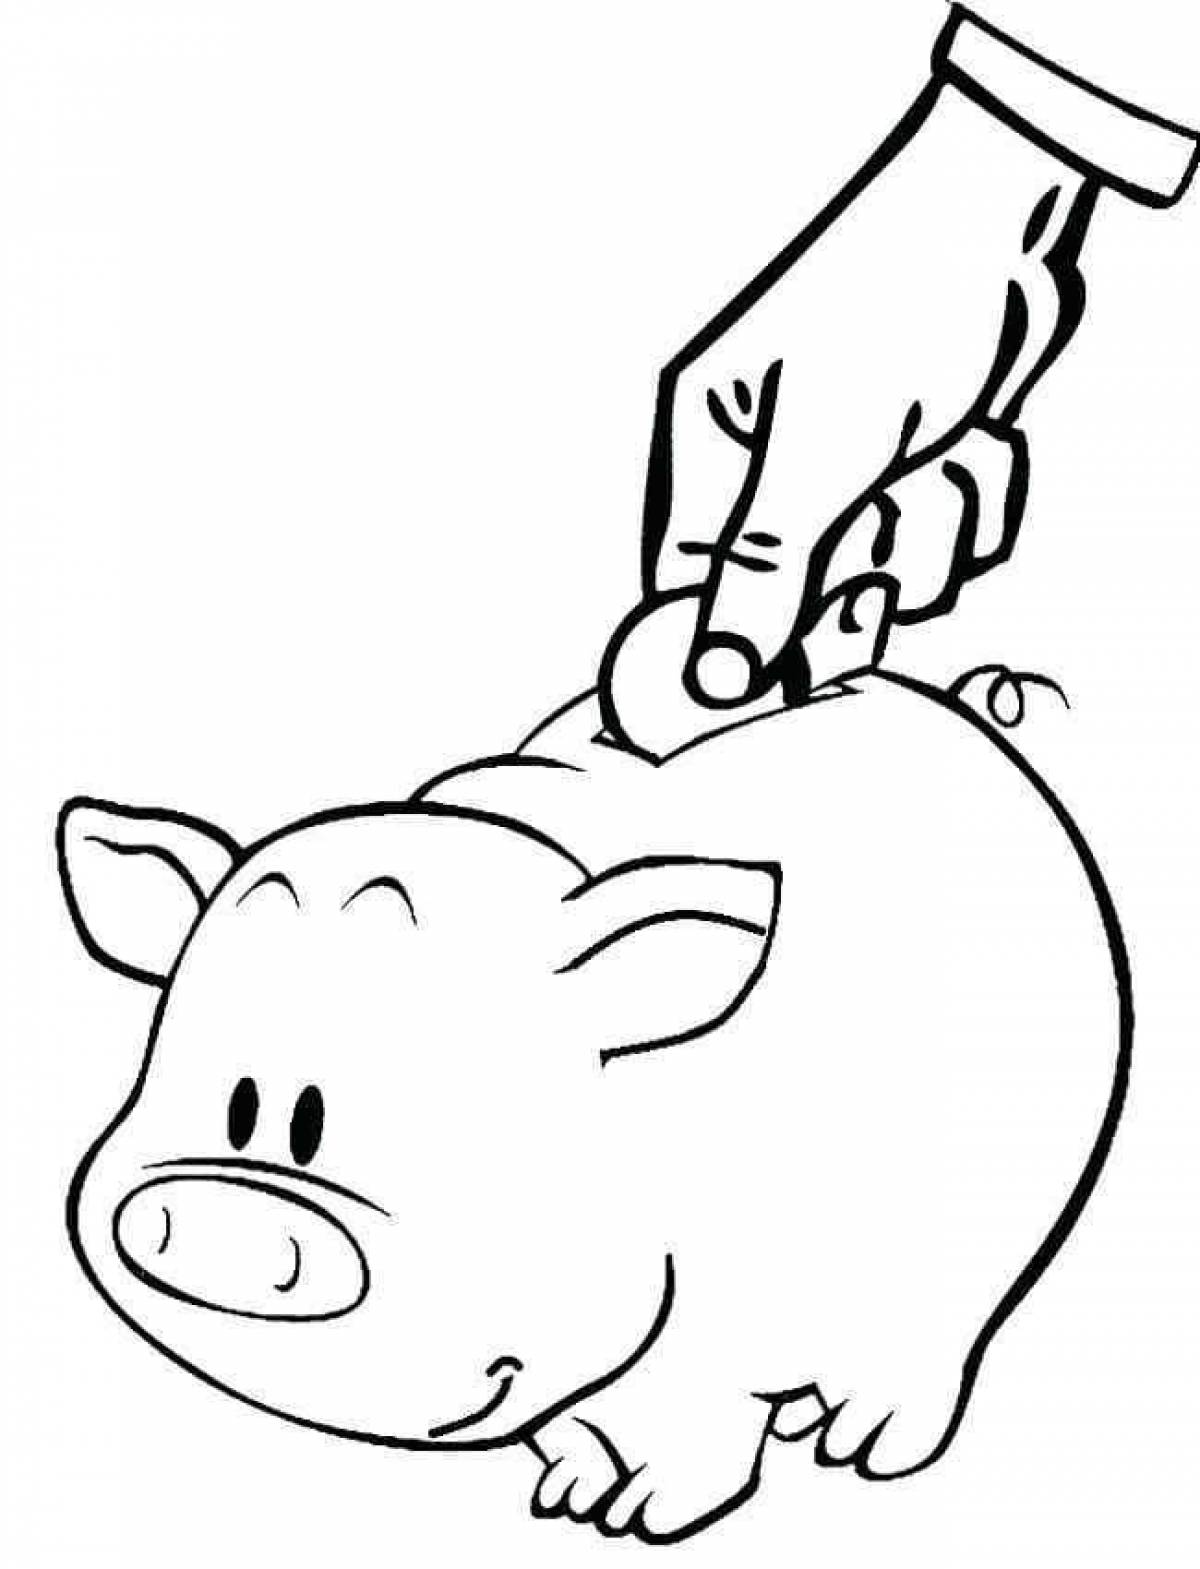 Naughty pig coloring